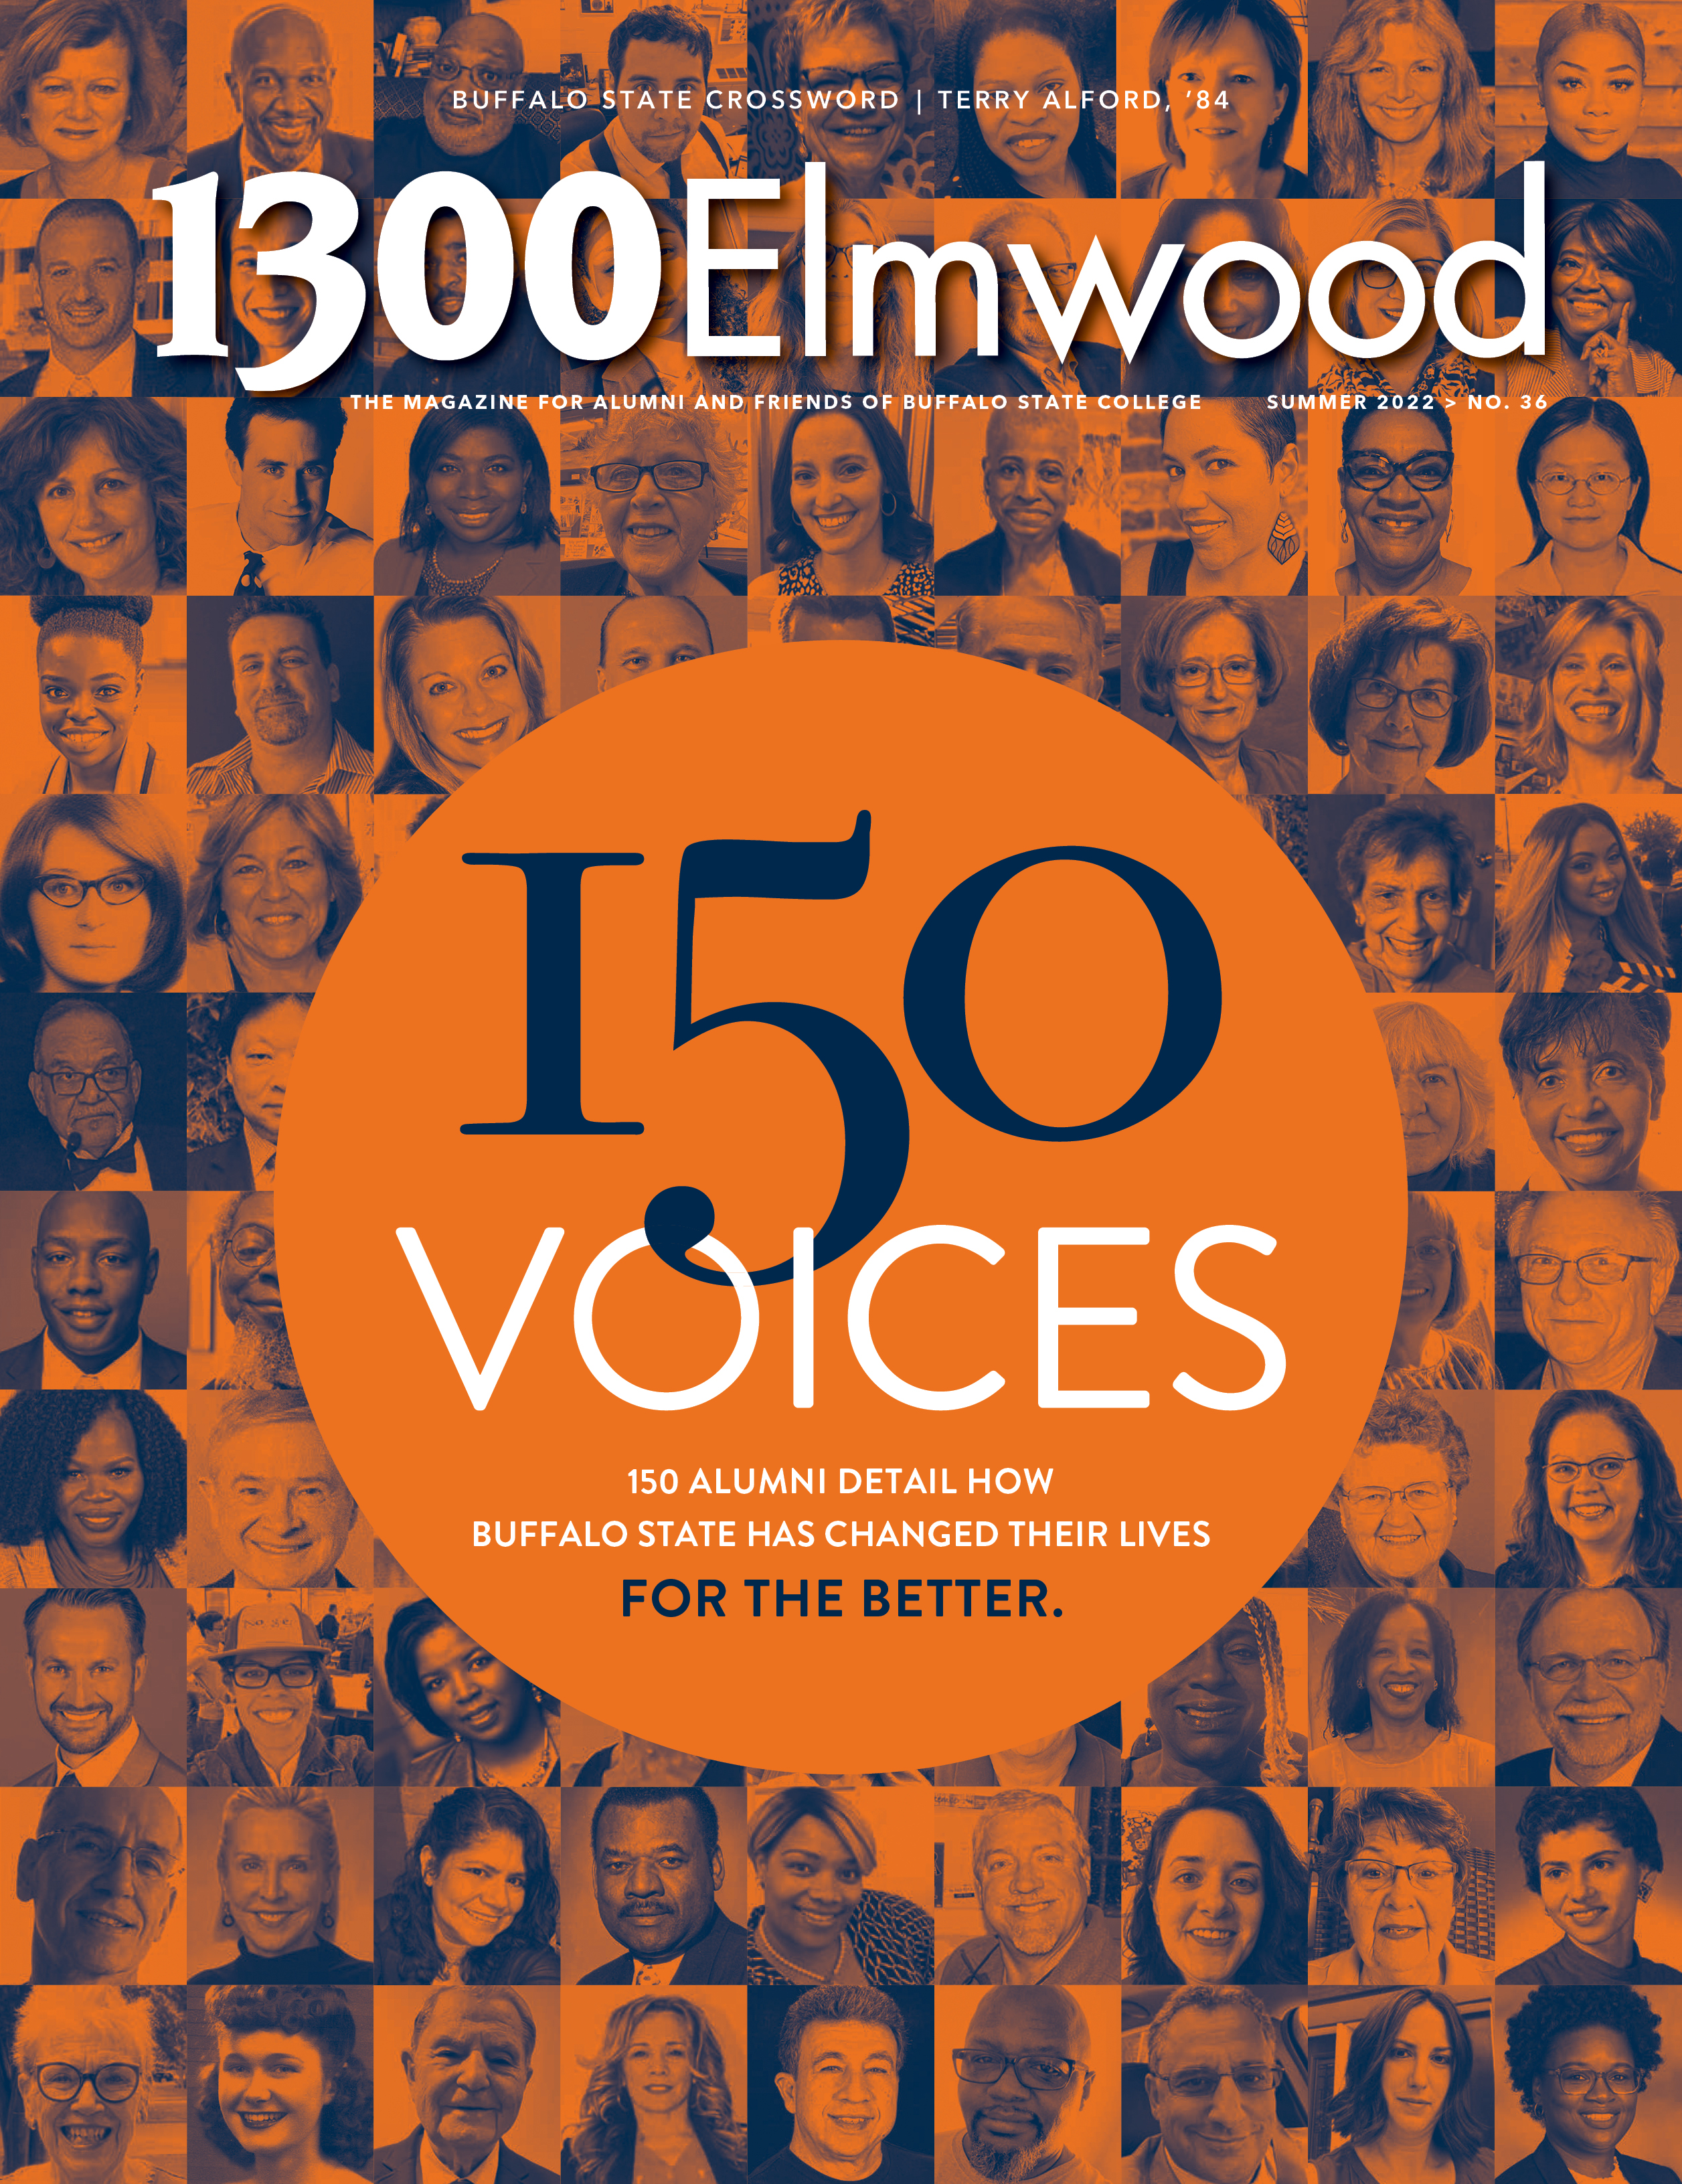 Cover of 1300 Elmwood Magazine Summer 2022